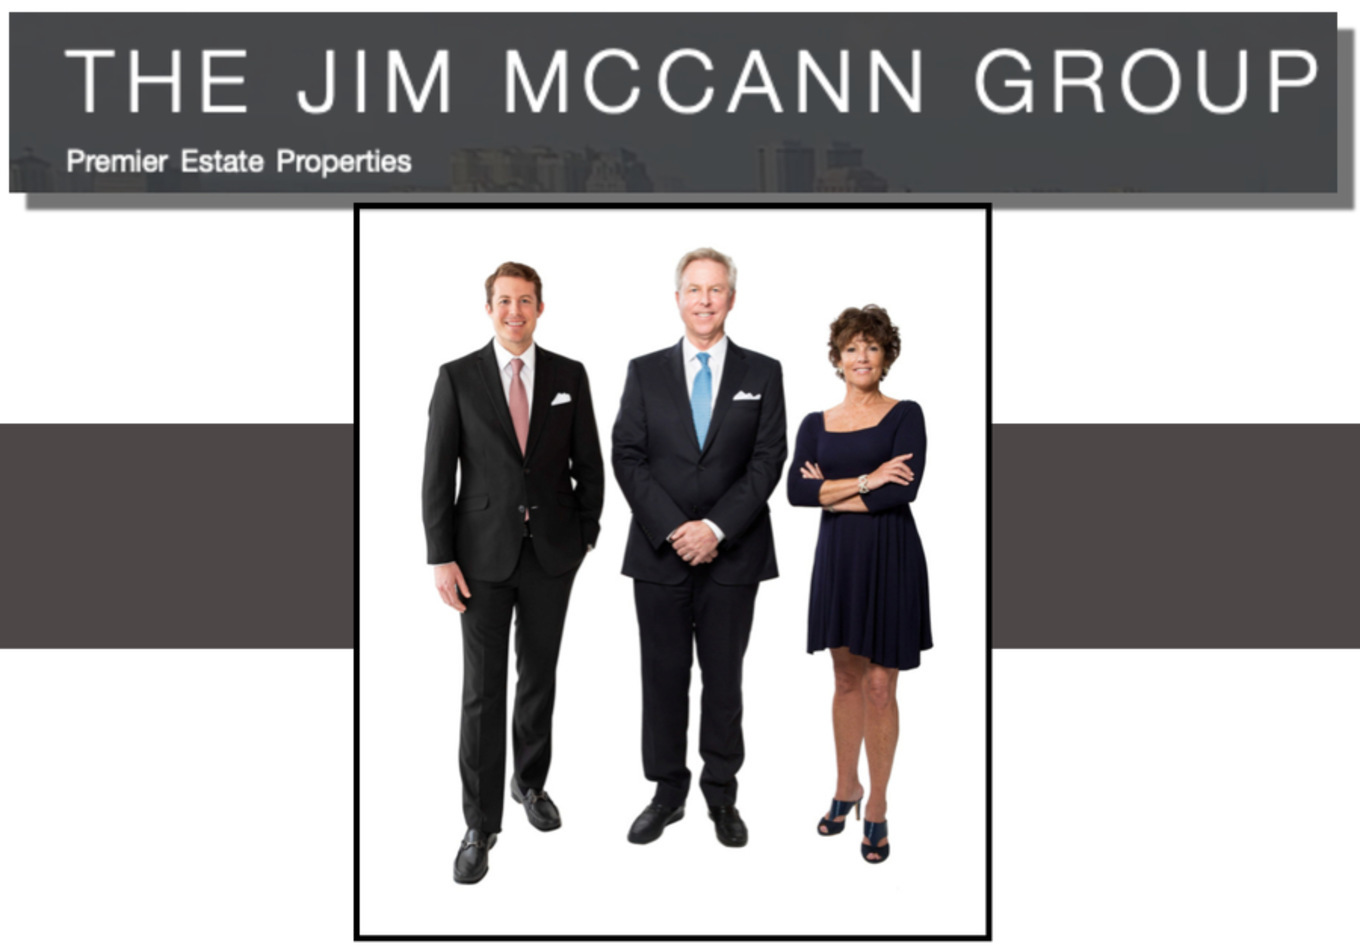 Jim McCann Group - Premier Estate Properties , Wednesday, July 29, 2020, Press release picture